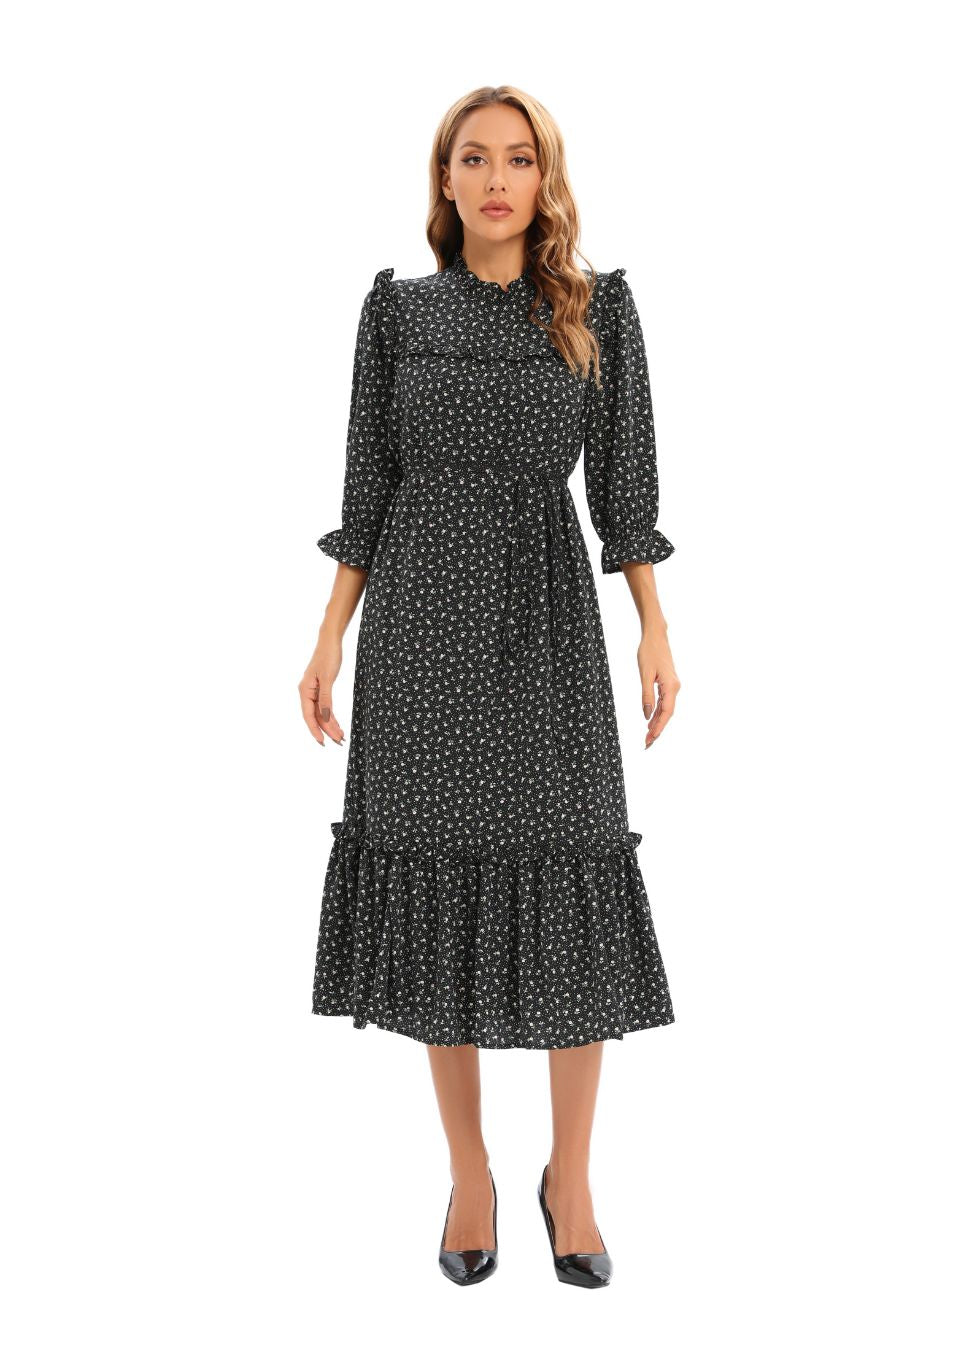 Midi Print Dress with 3/4 Sleeves - alamaud